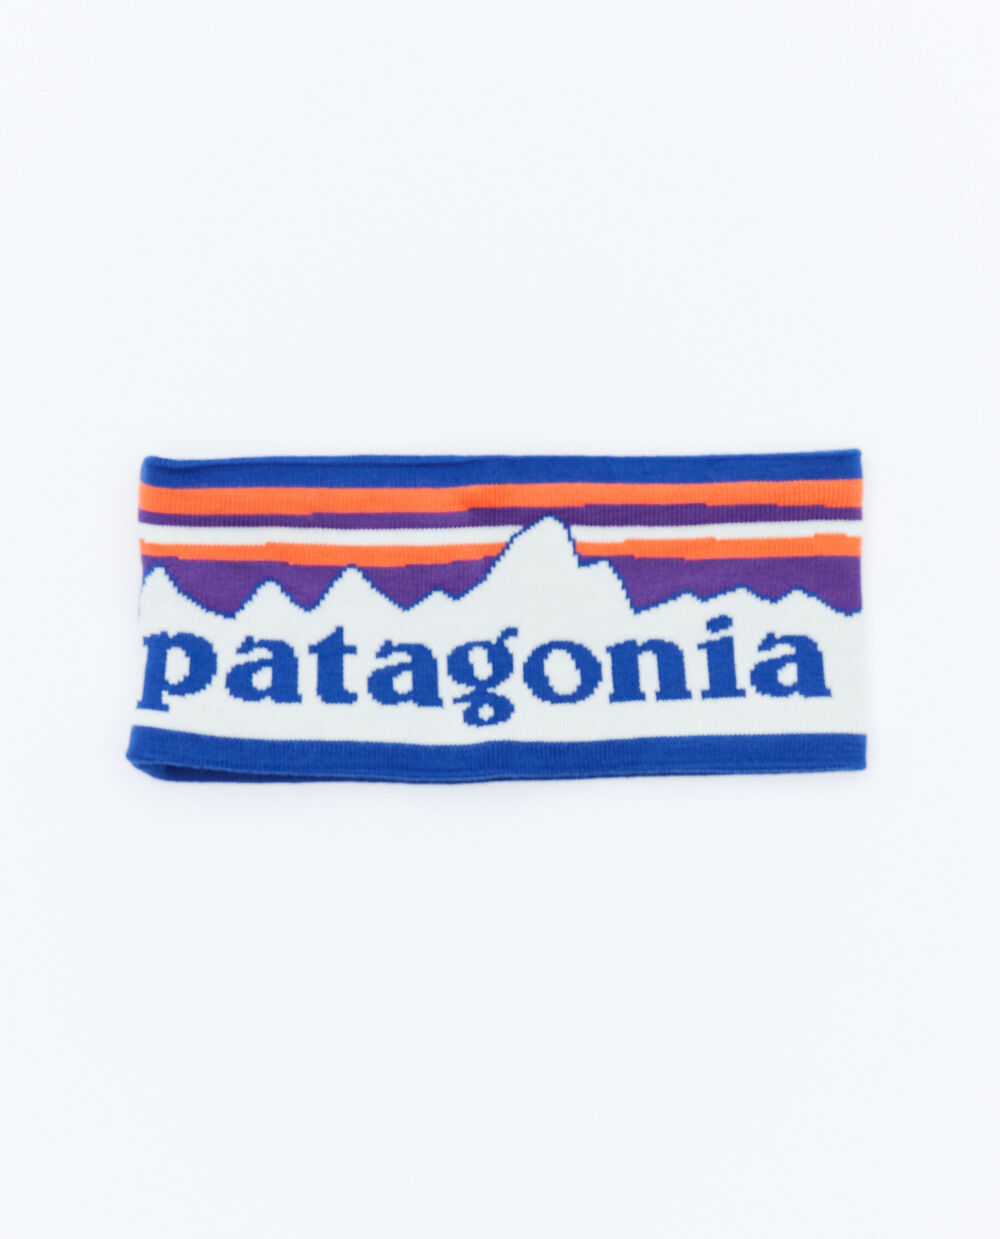 PATAGONIA POWDER TOWN HEADBAND